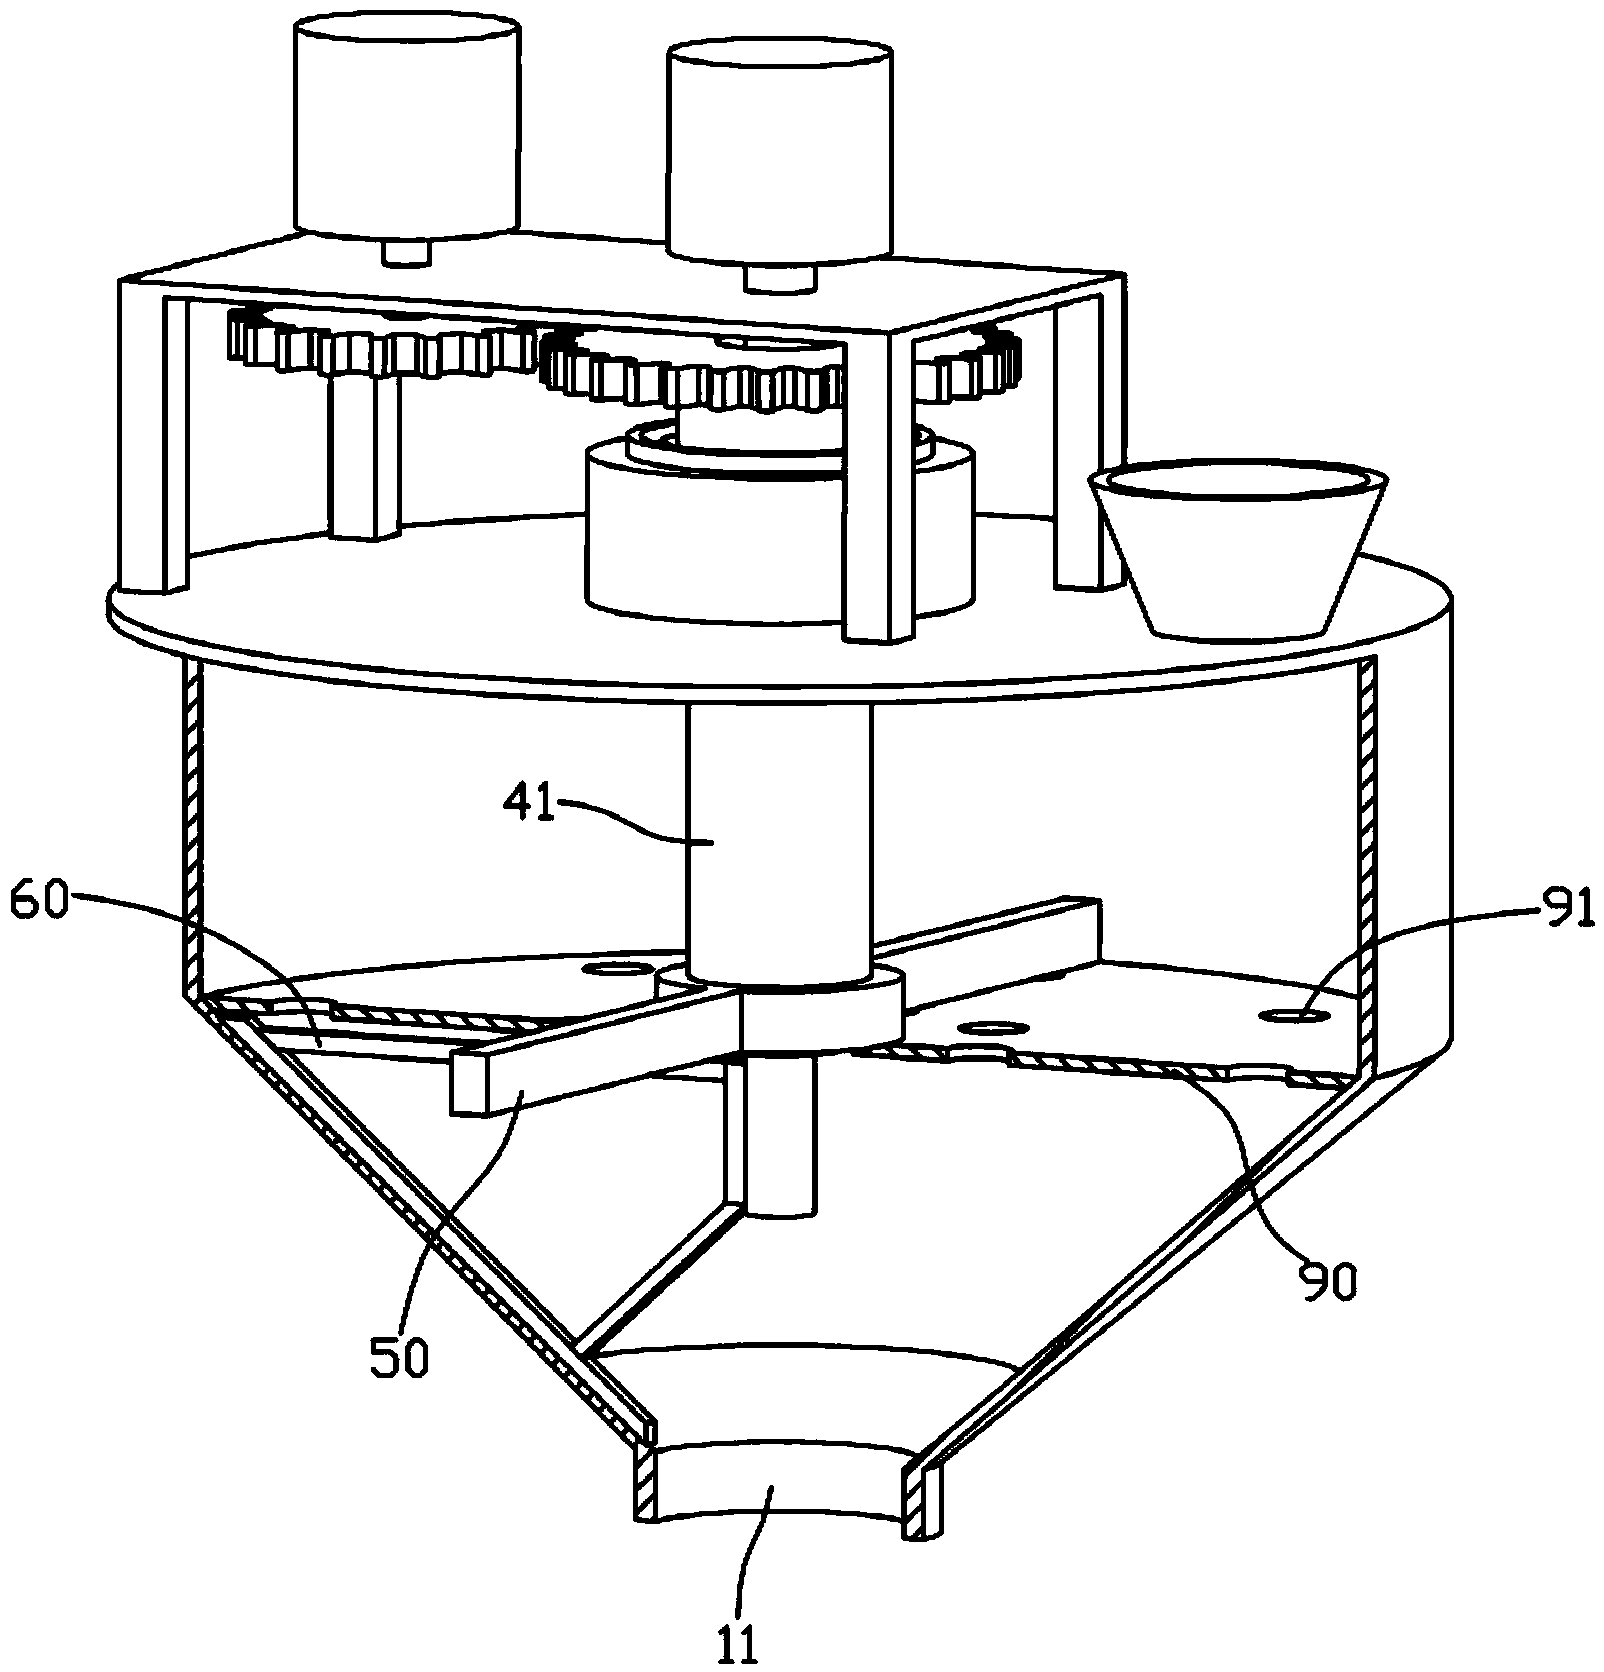 Pre-mixing device of continuous dough mixer